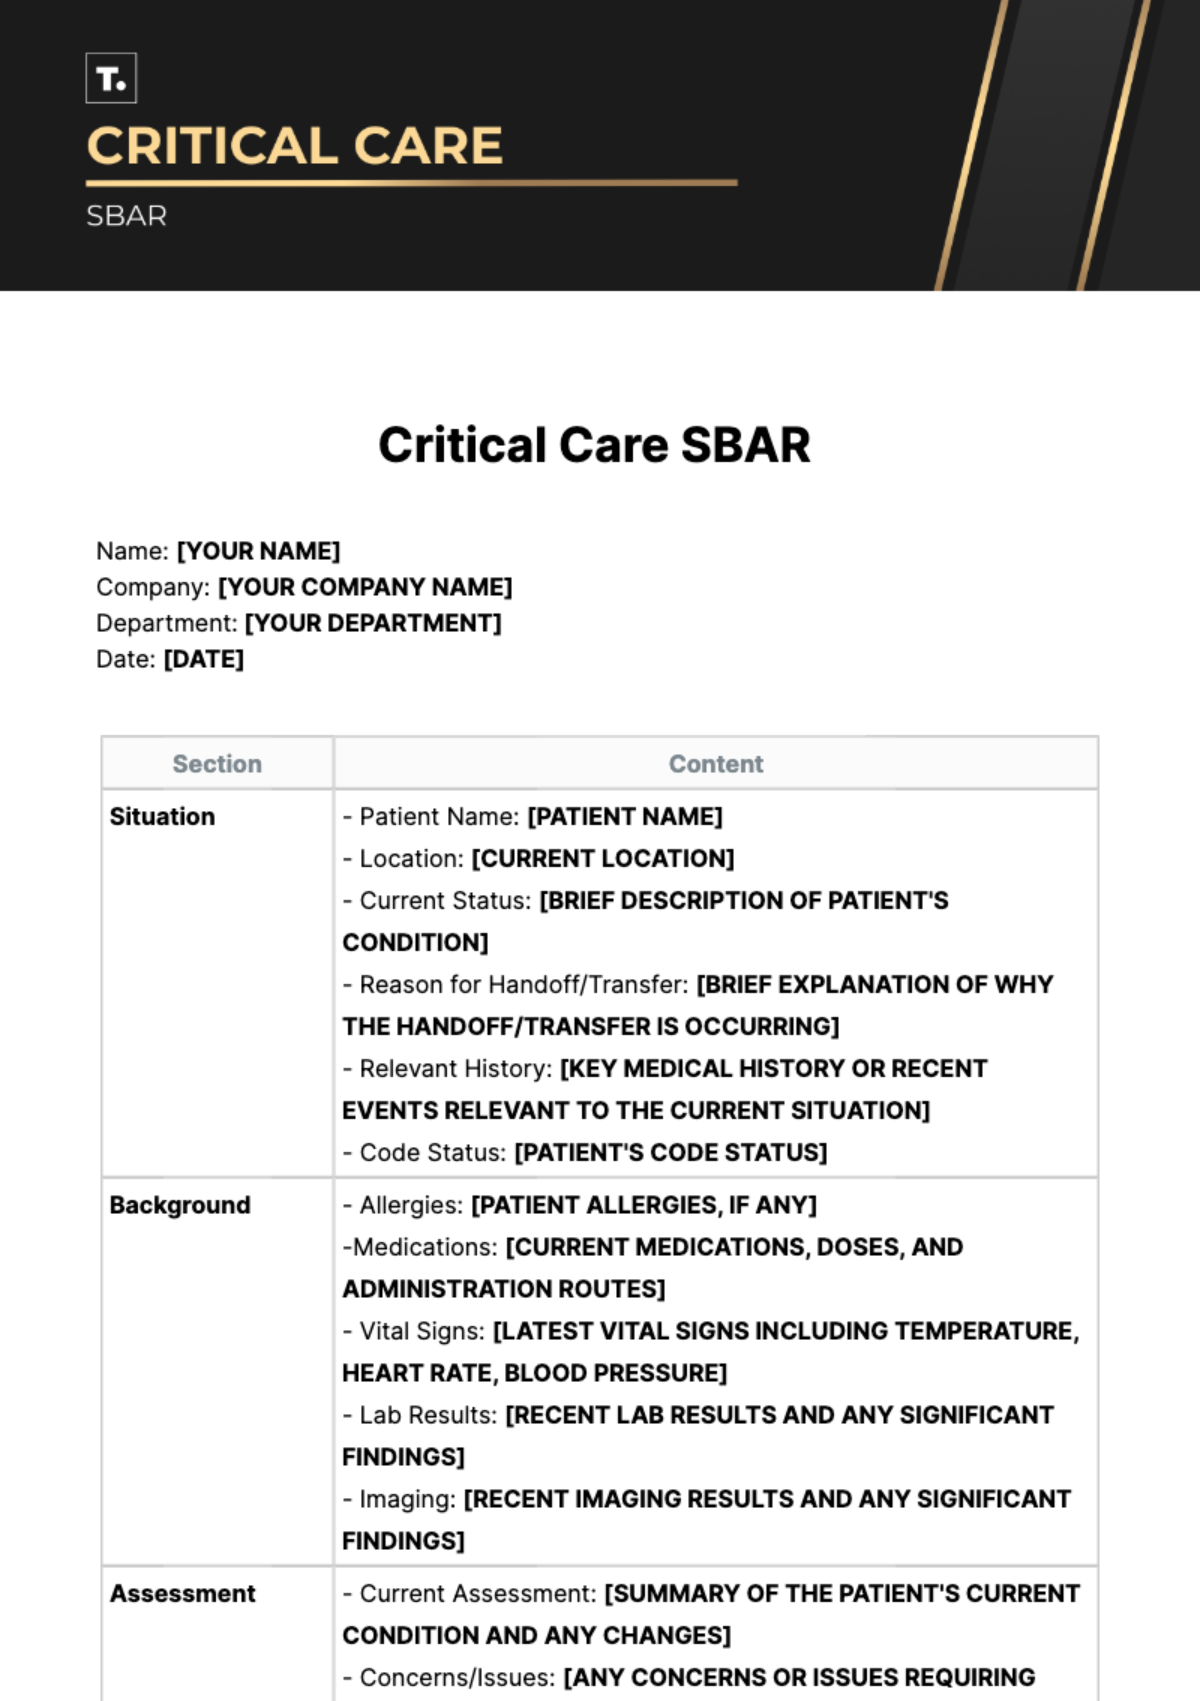 Critical Care SBAR Template